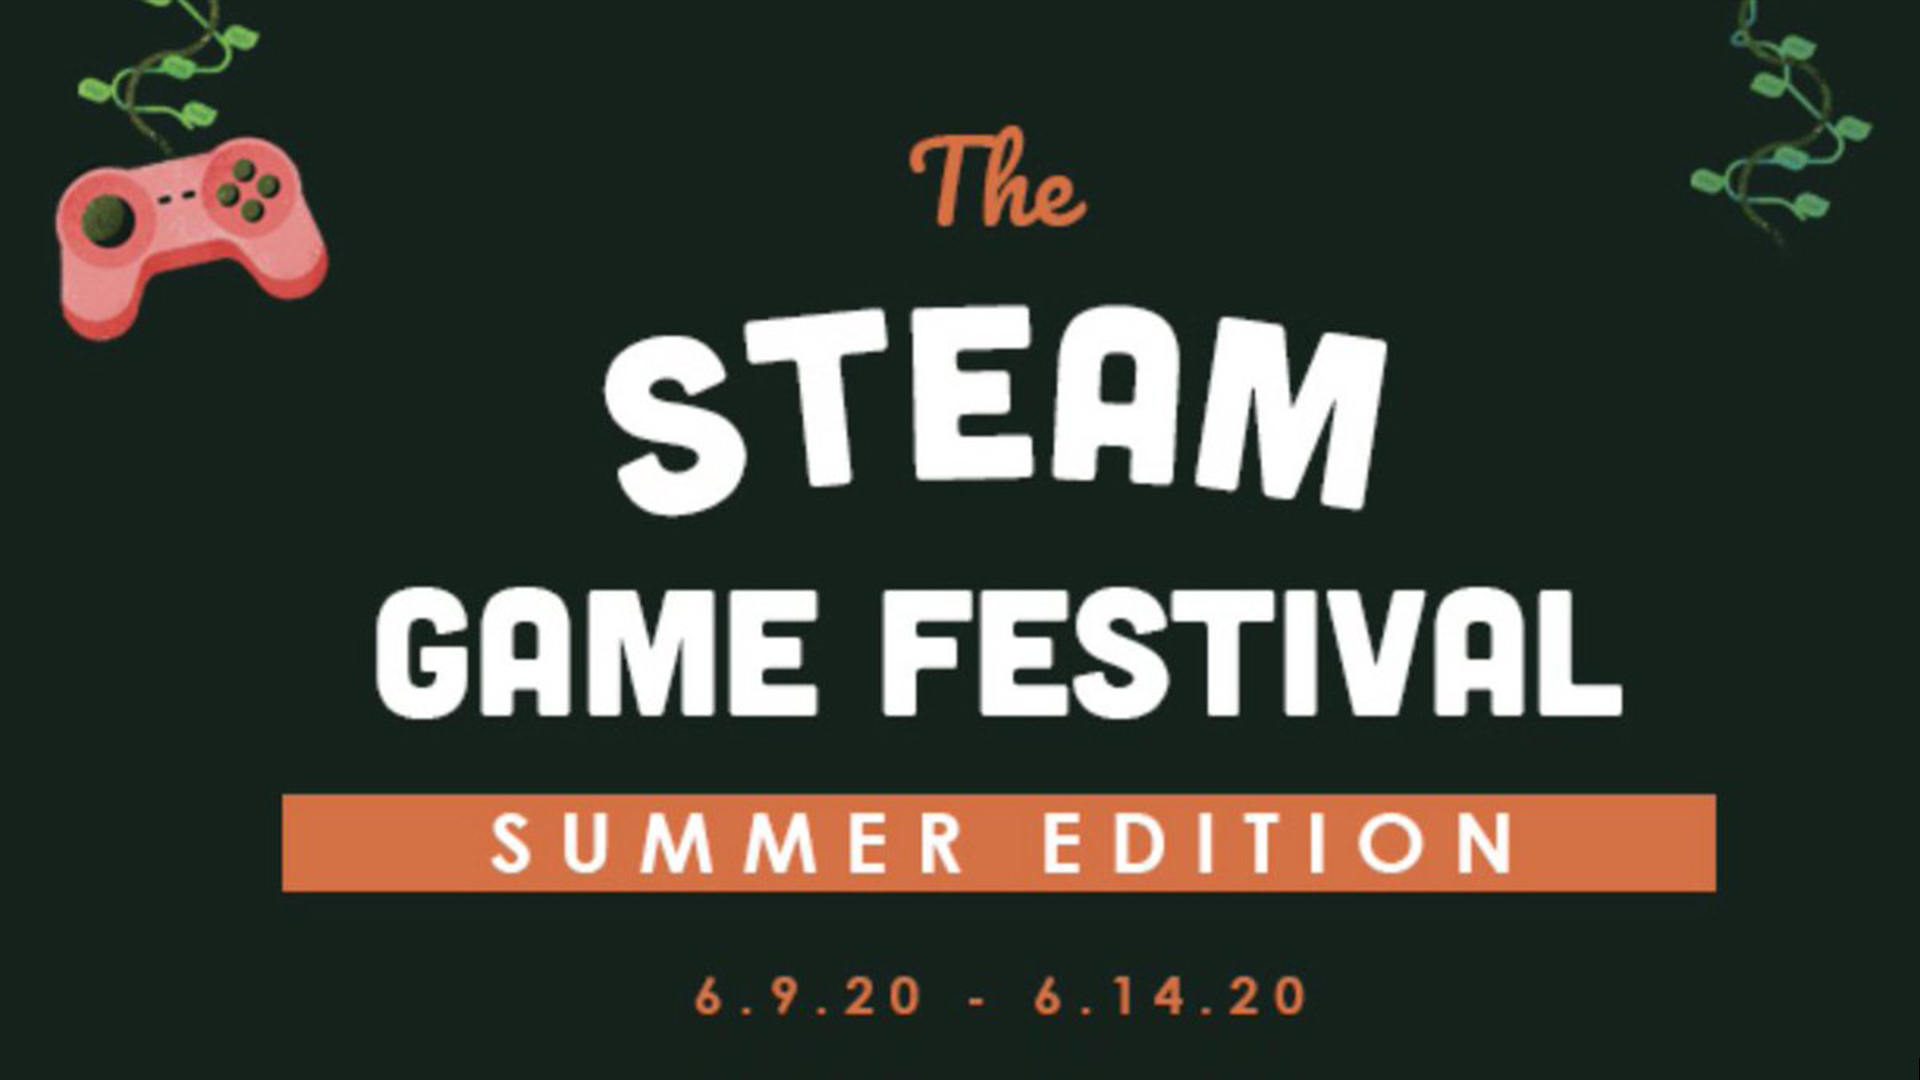 The Steam Games Festival 2020